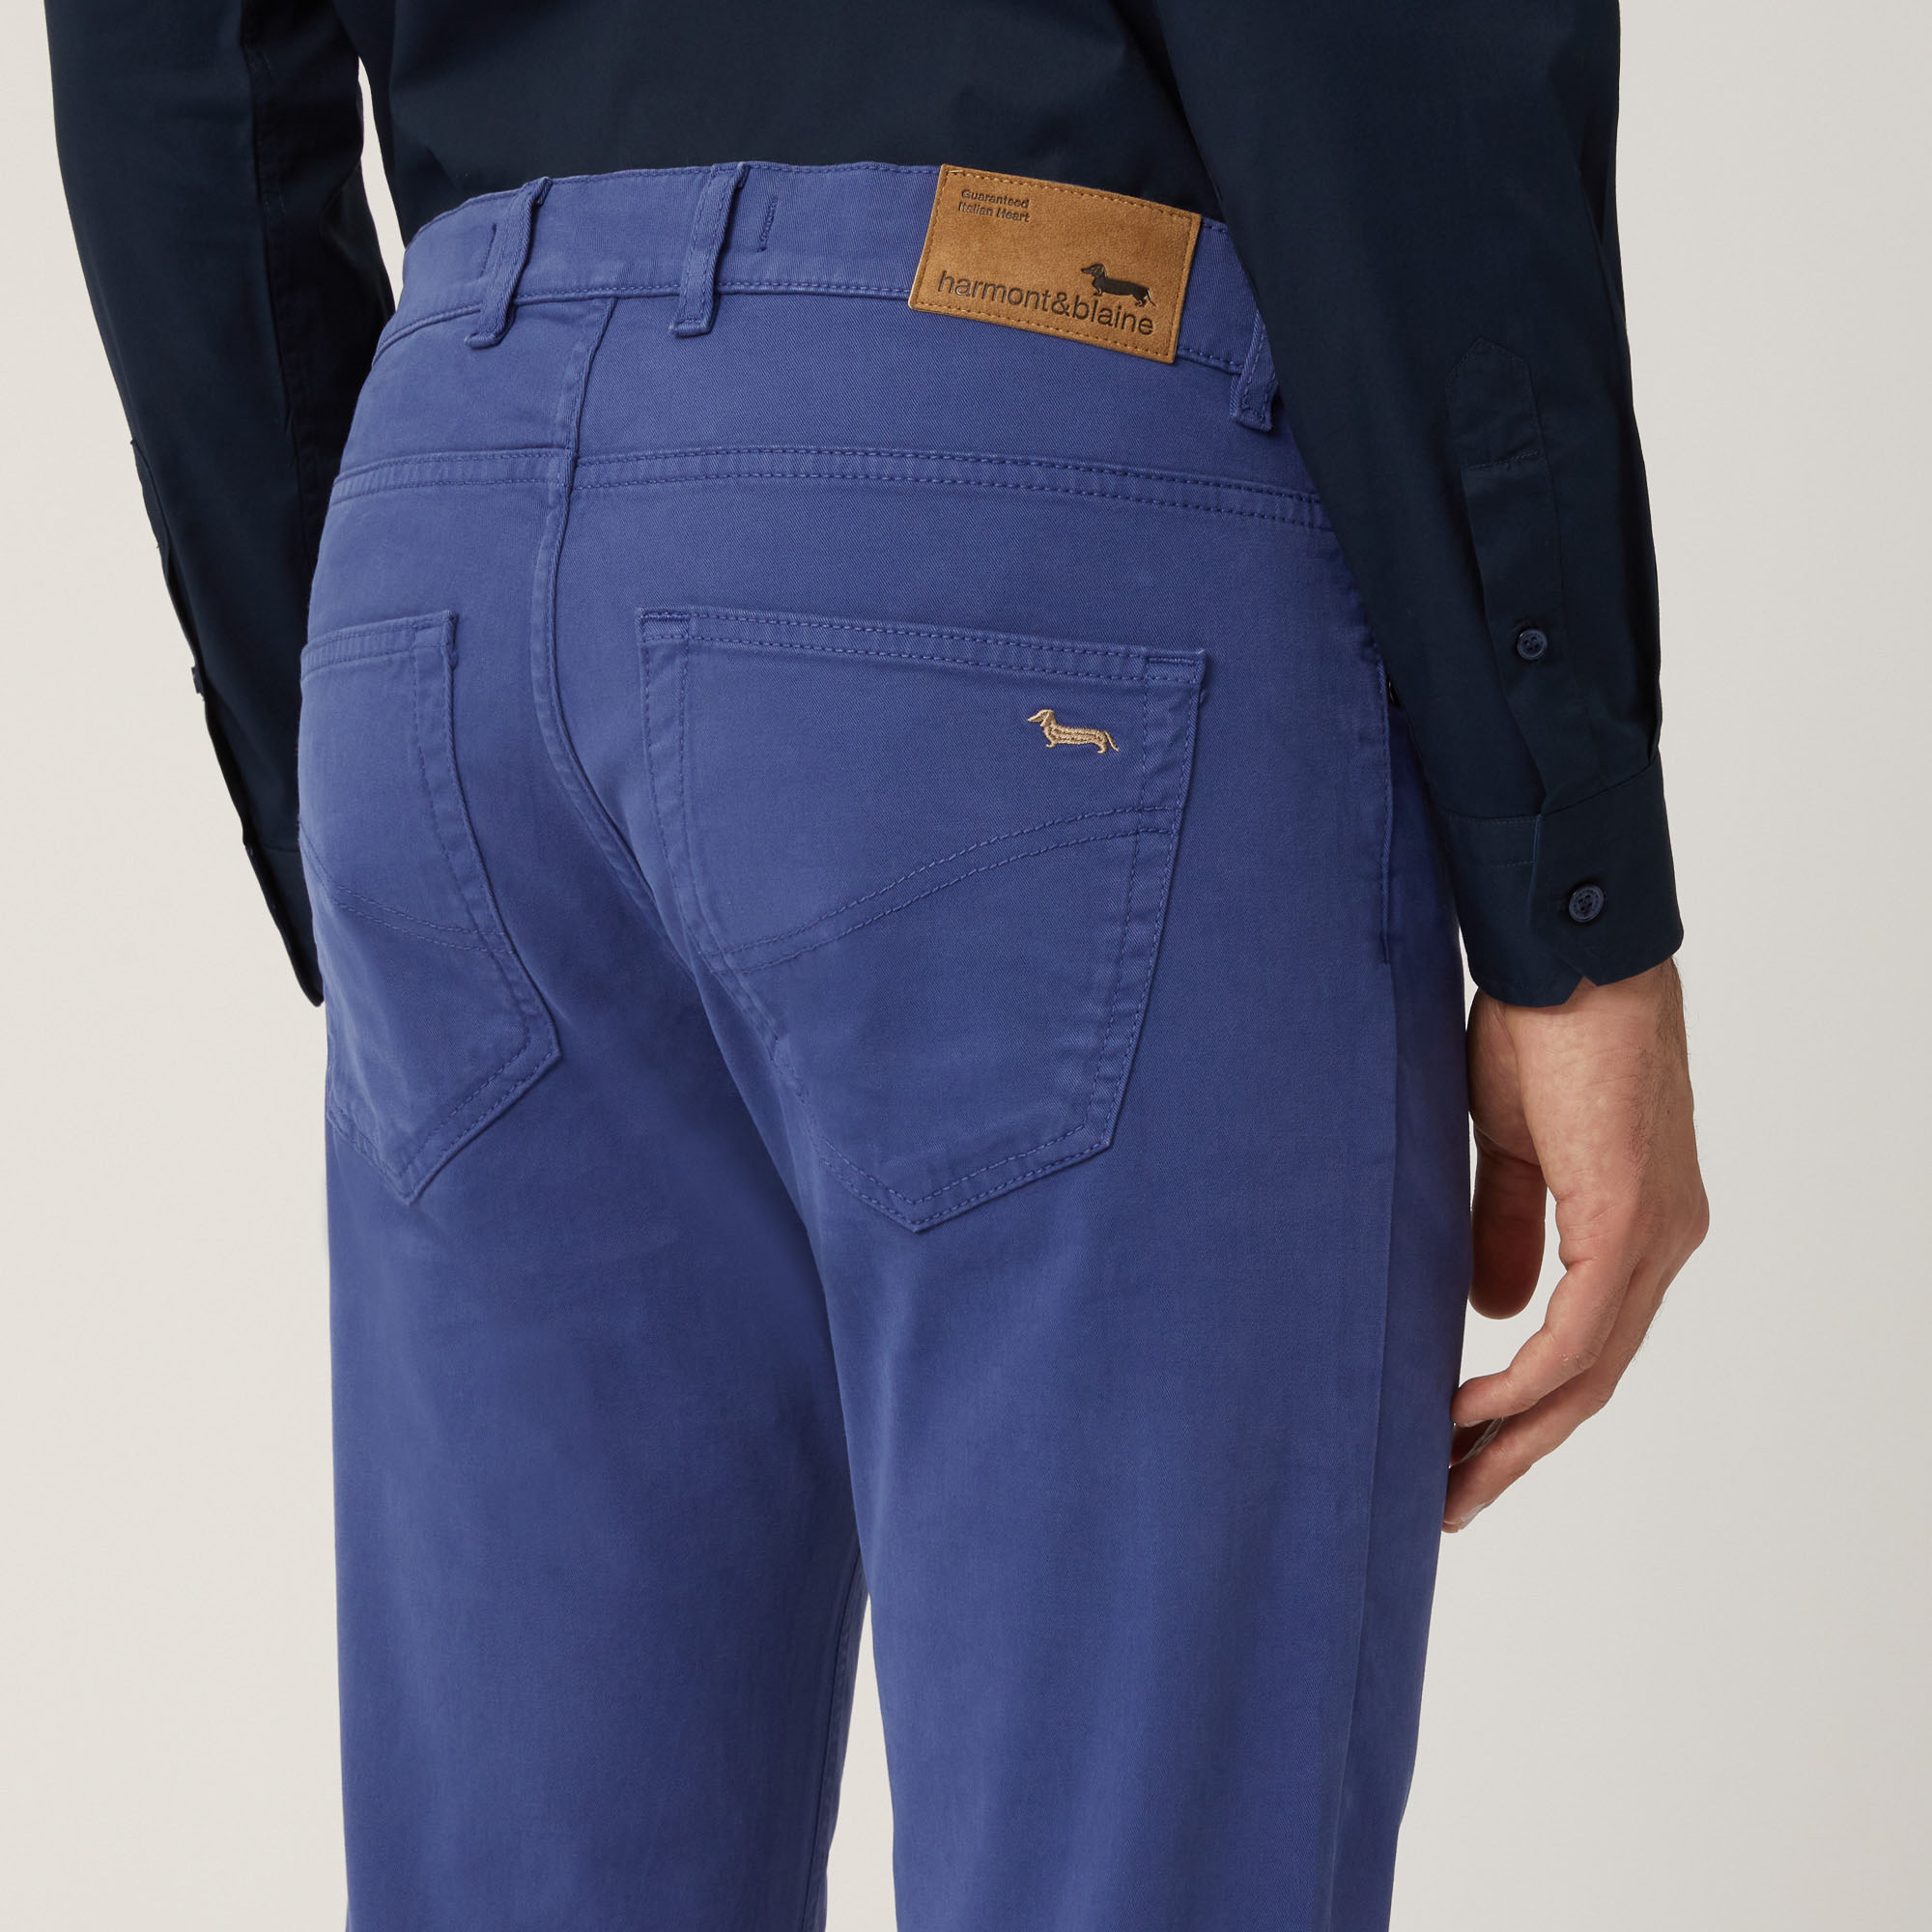 Pantalone Cinque Tasche In Cotone Stretch Elevated Utility, Blu Chiaro, large